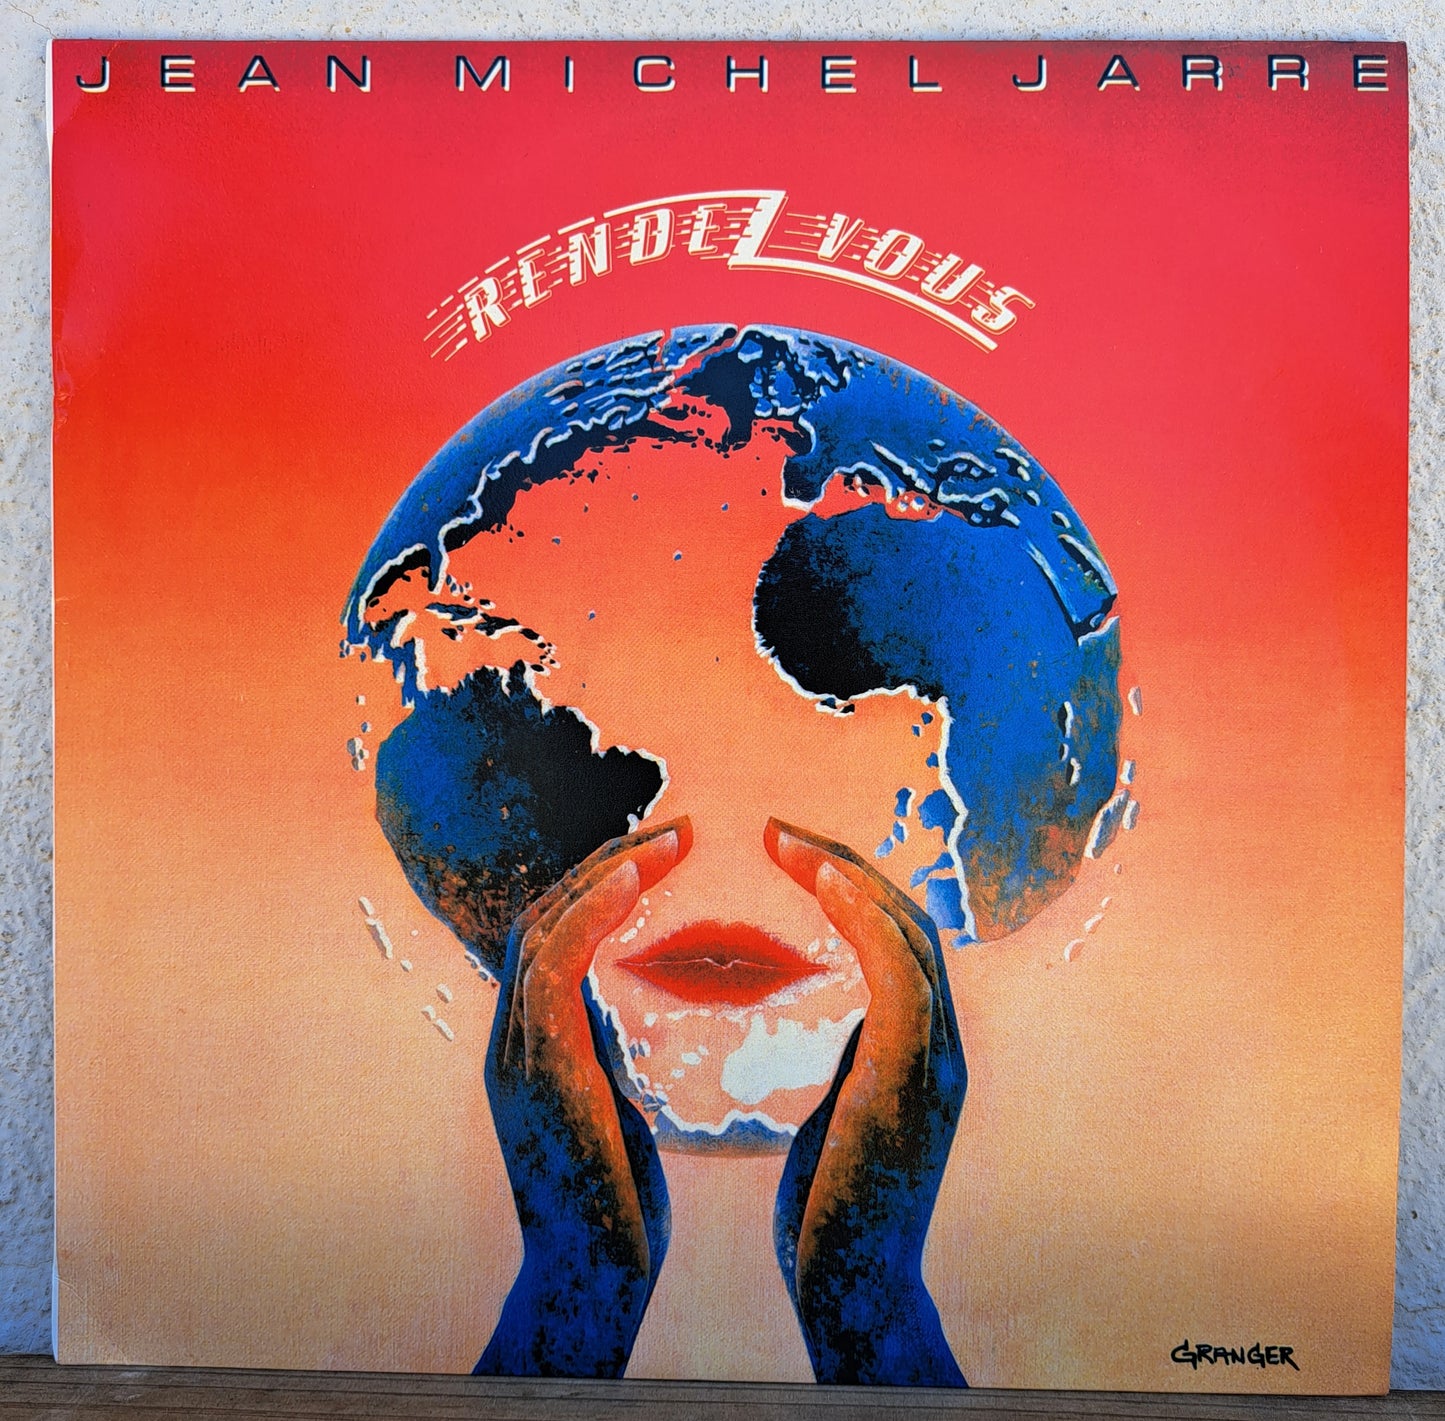 Jean Michel Jarre - Rendezvous